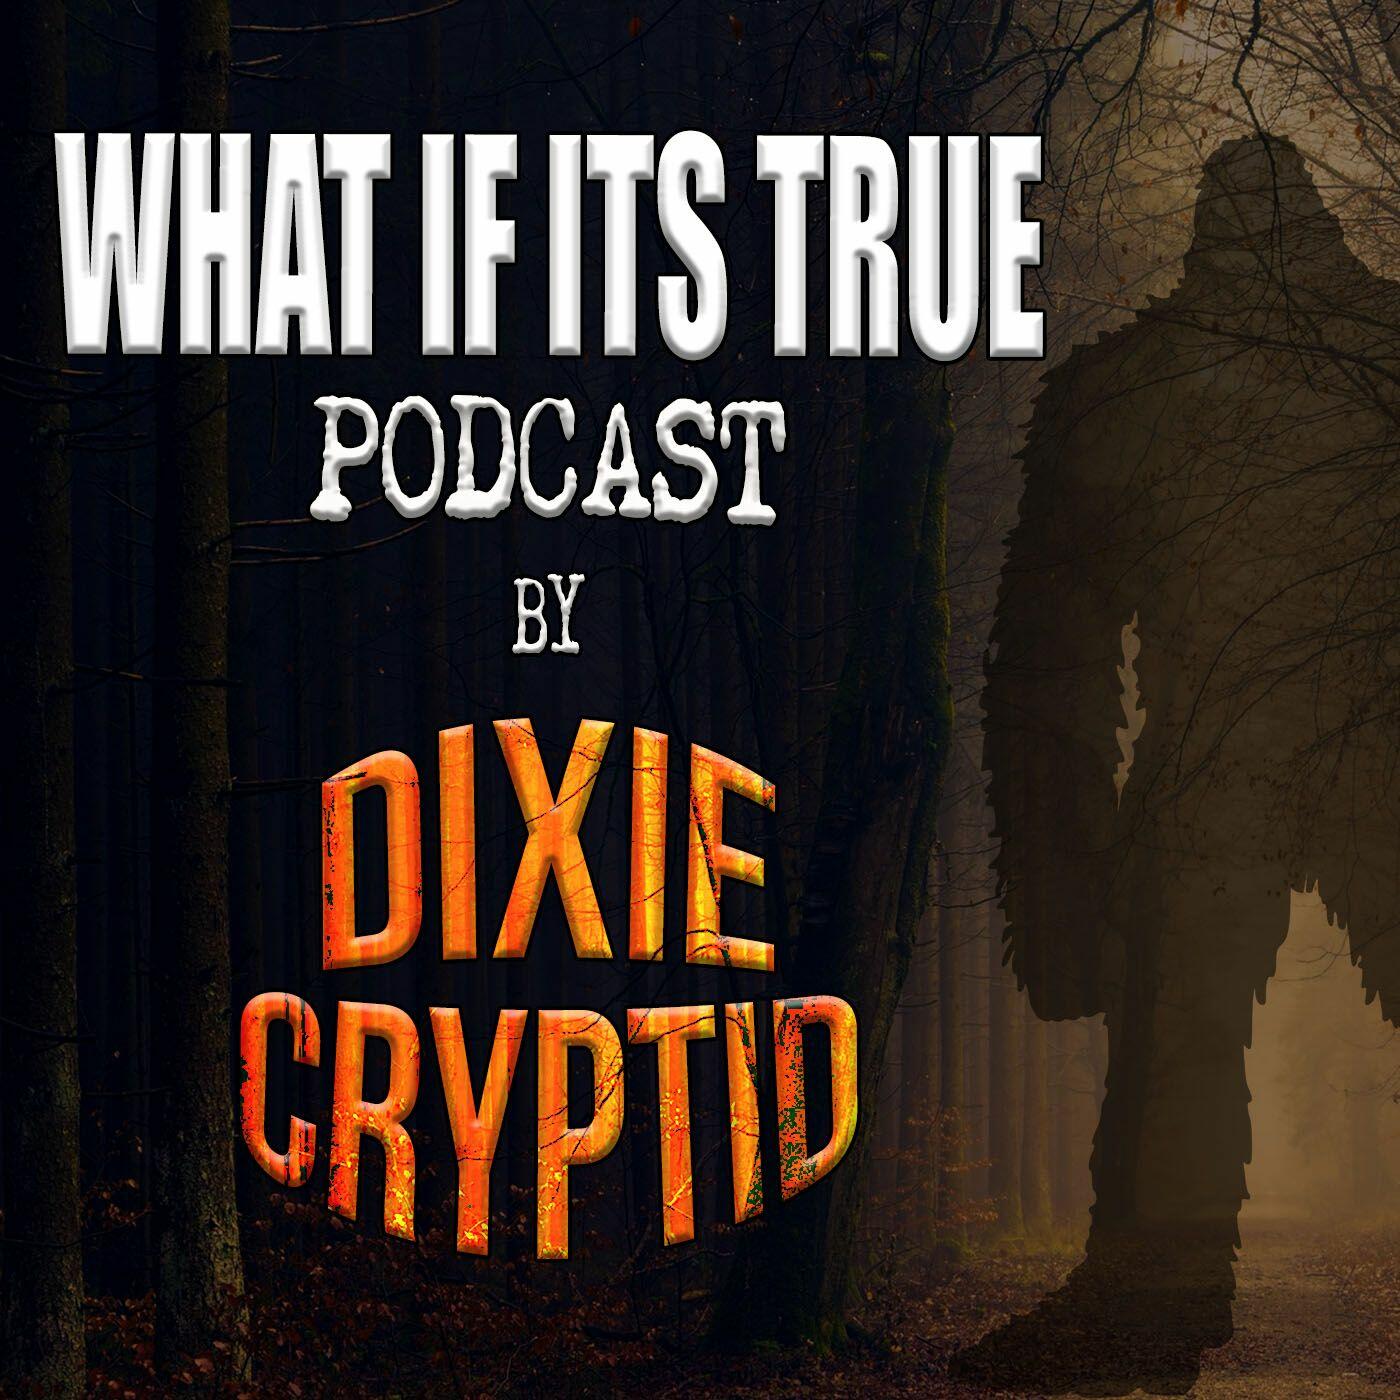 Listen to Cryptid V Cryptid podcast